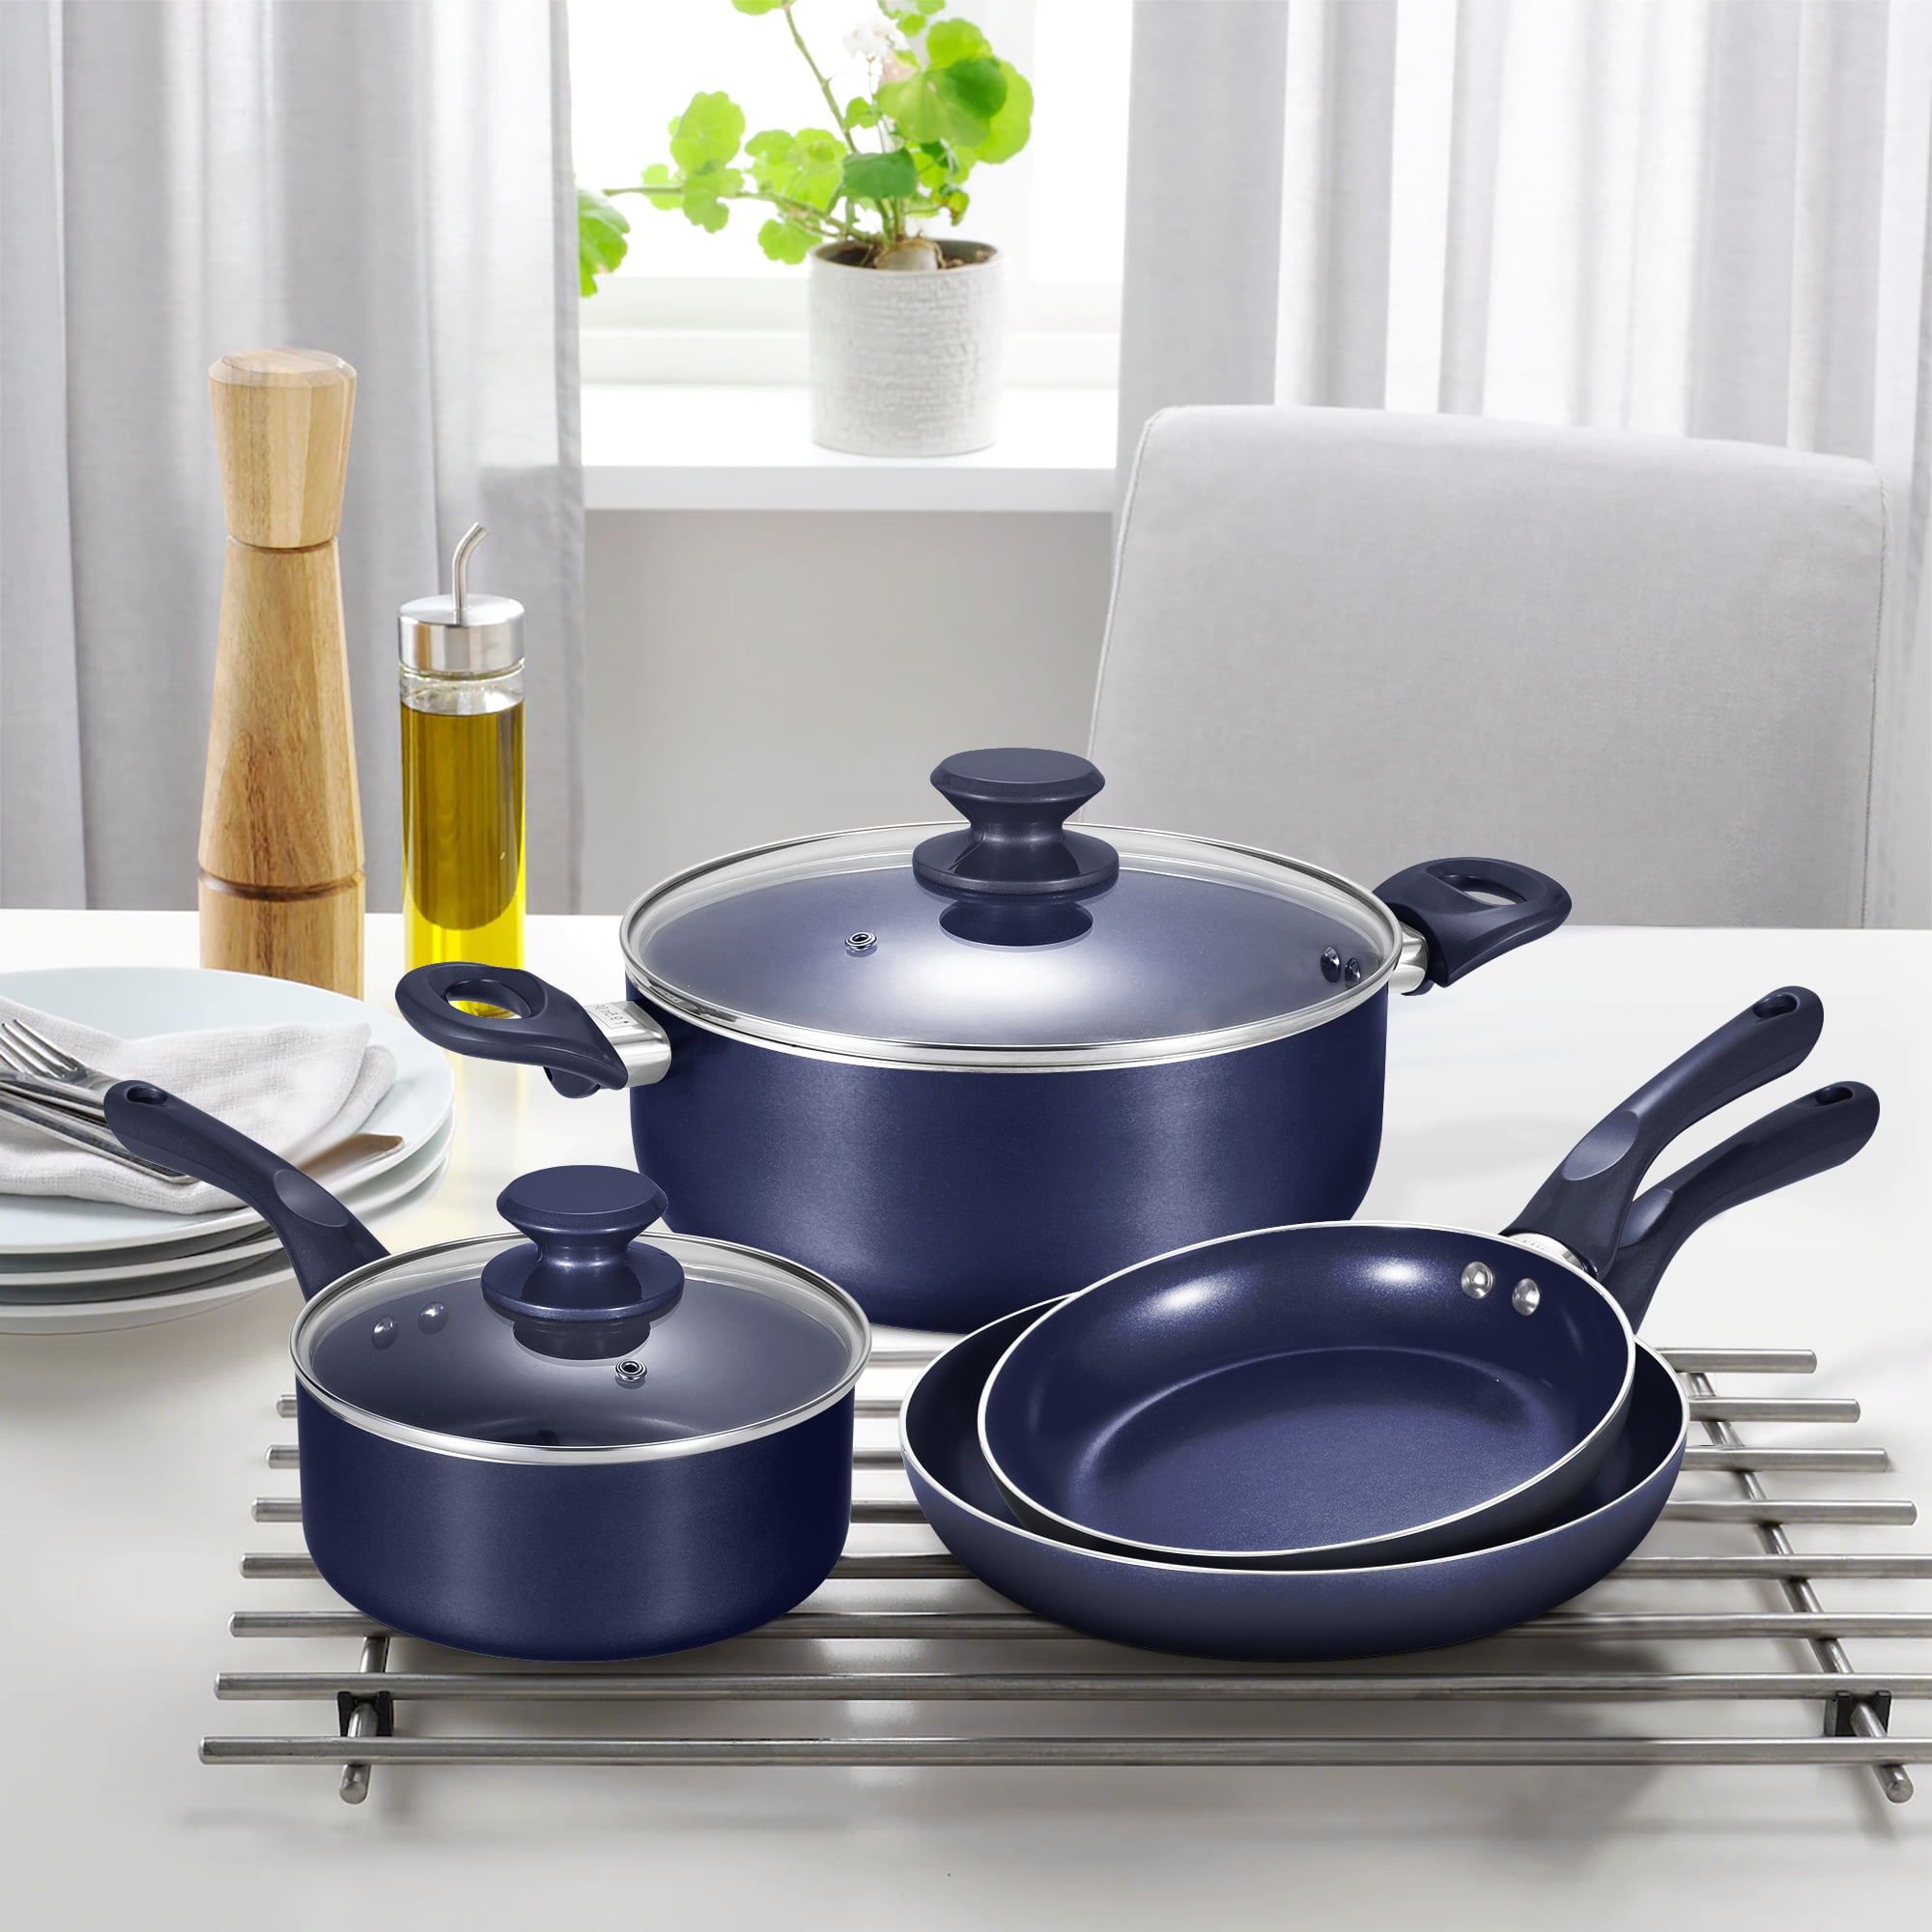 6 Pieces Pots and Pans Set,Aluminum Cookware Set, Nonstick Ceramic Coating, Fry  Pan, Stockpot with Lid, Blue - AliExpress